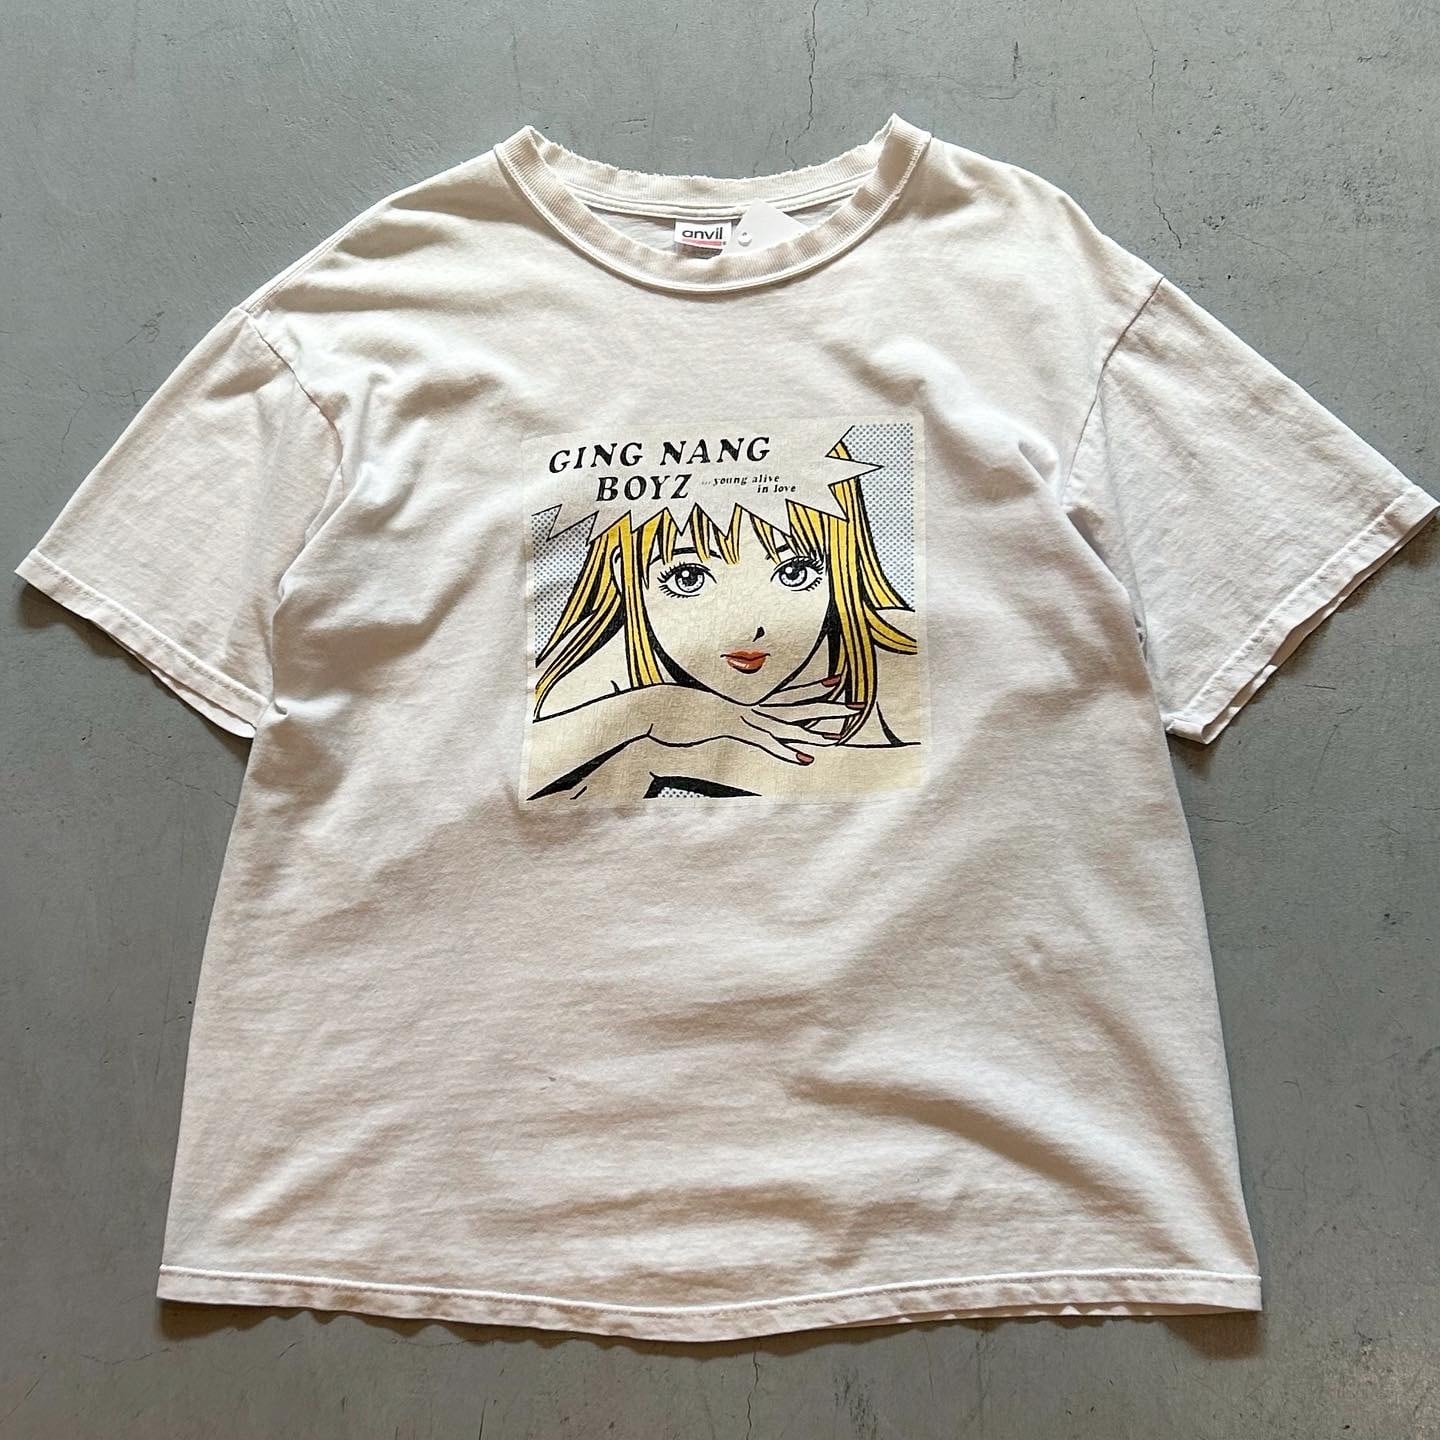 00s 銀杏boyz ”君と僕の第三次世界大戦的恋愛革命“ t-shirt ”White